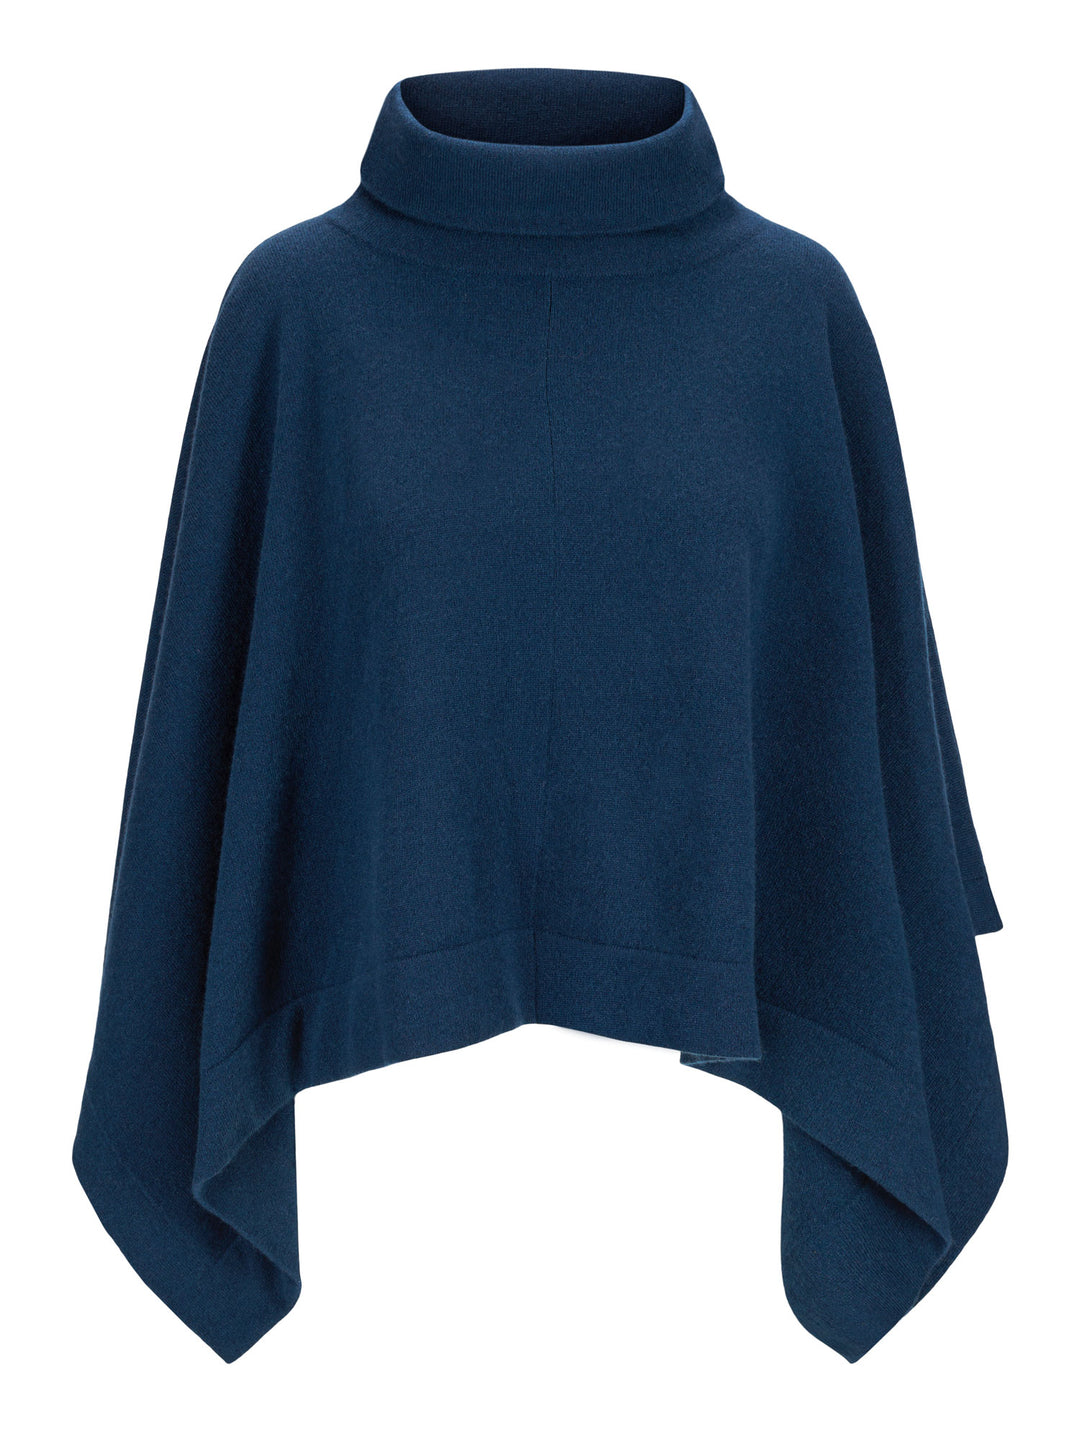 cashmere poncho, turtle neck, mountain blue 100% pure cashmere.